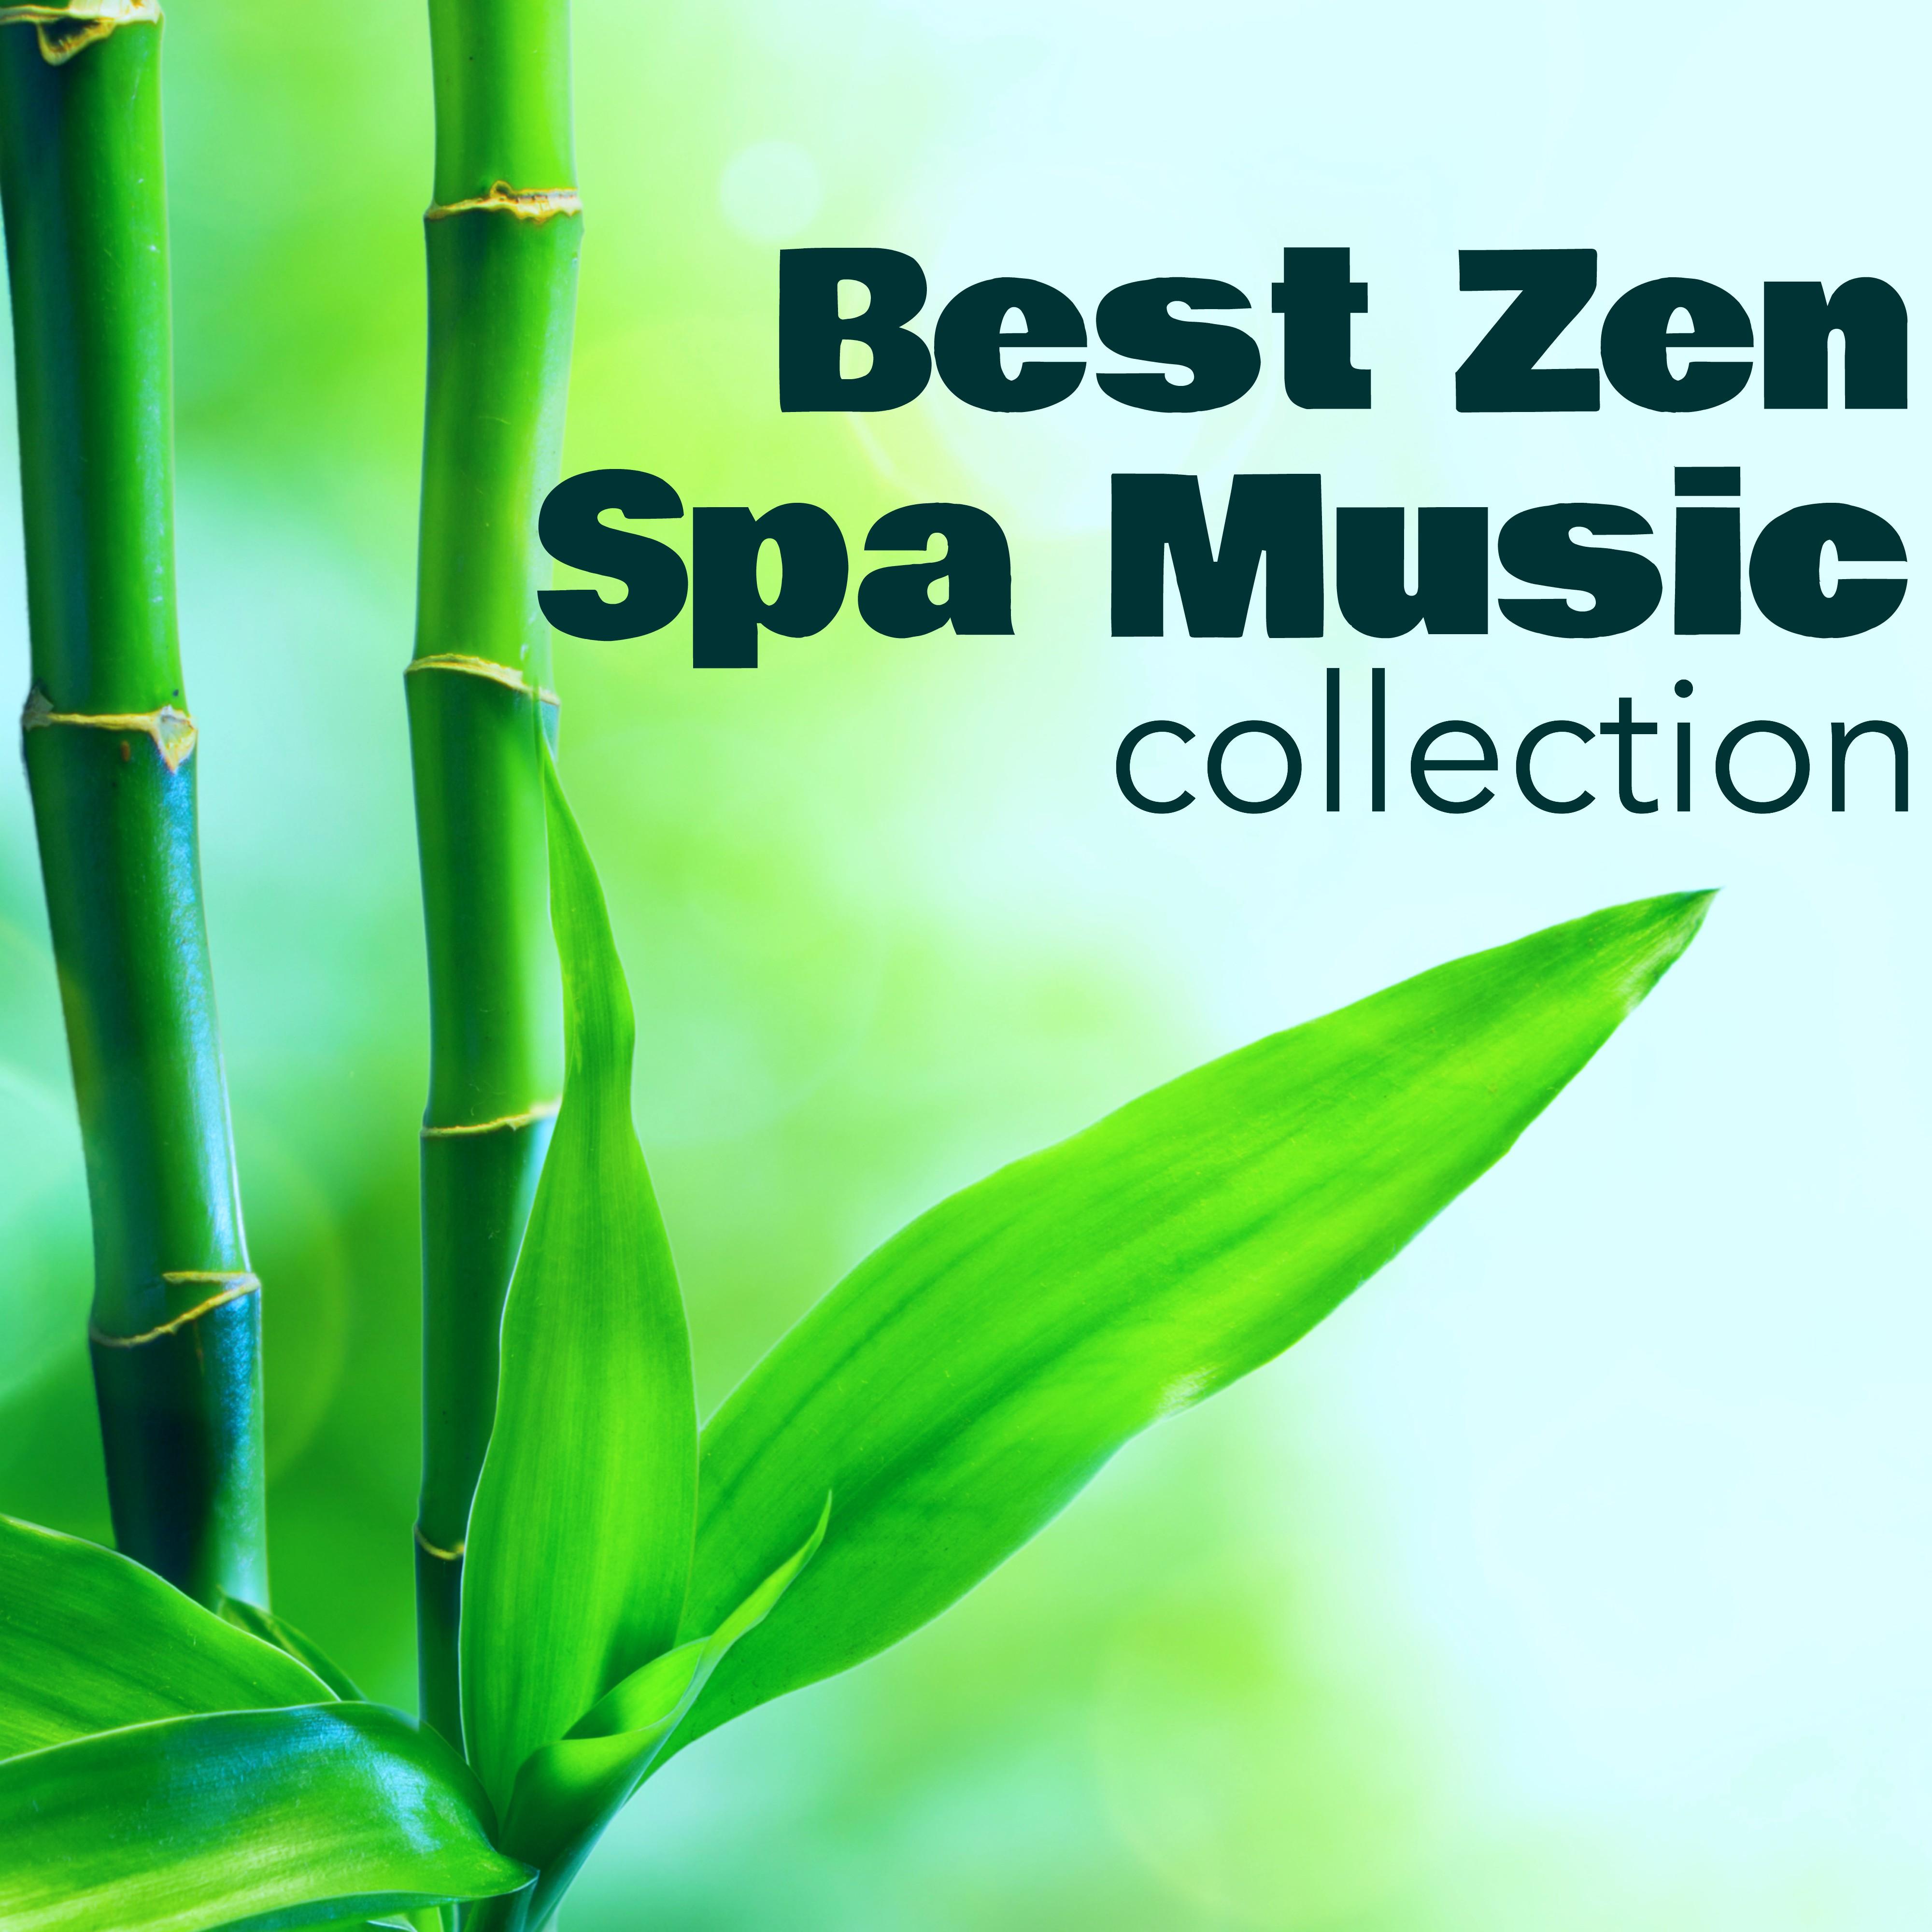 Best Zen Spa Music Collection - Nature Sounds, Sound of Water & Sea Waves, Massage, Saunas & Bath, Relaxation Meditation